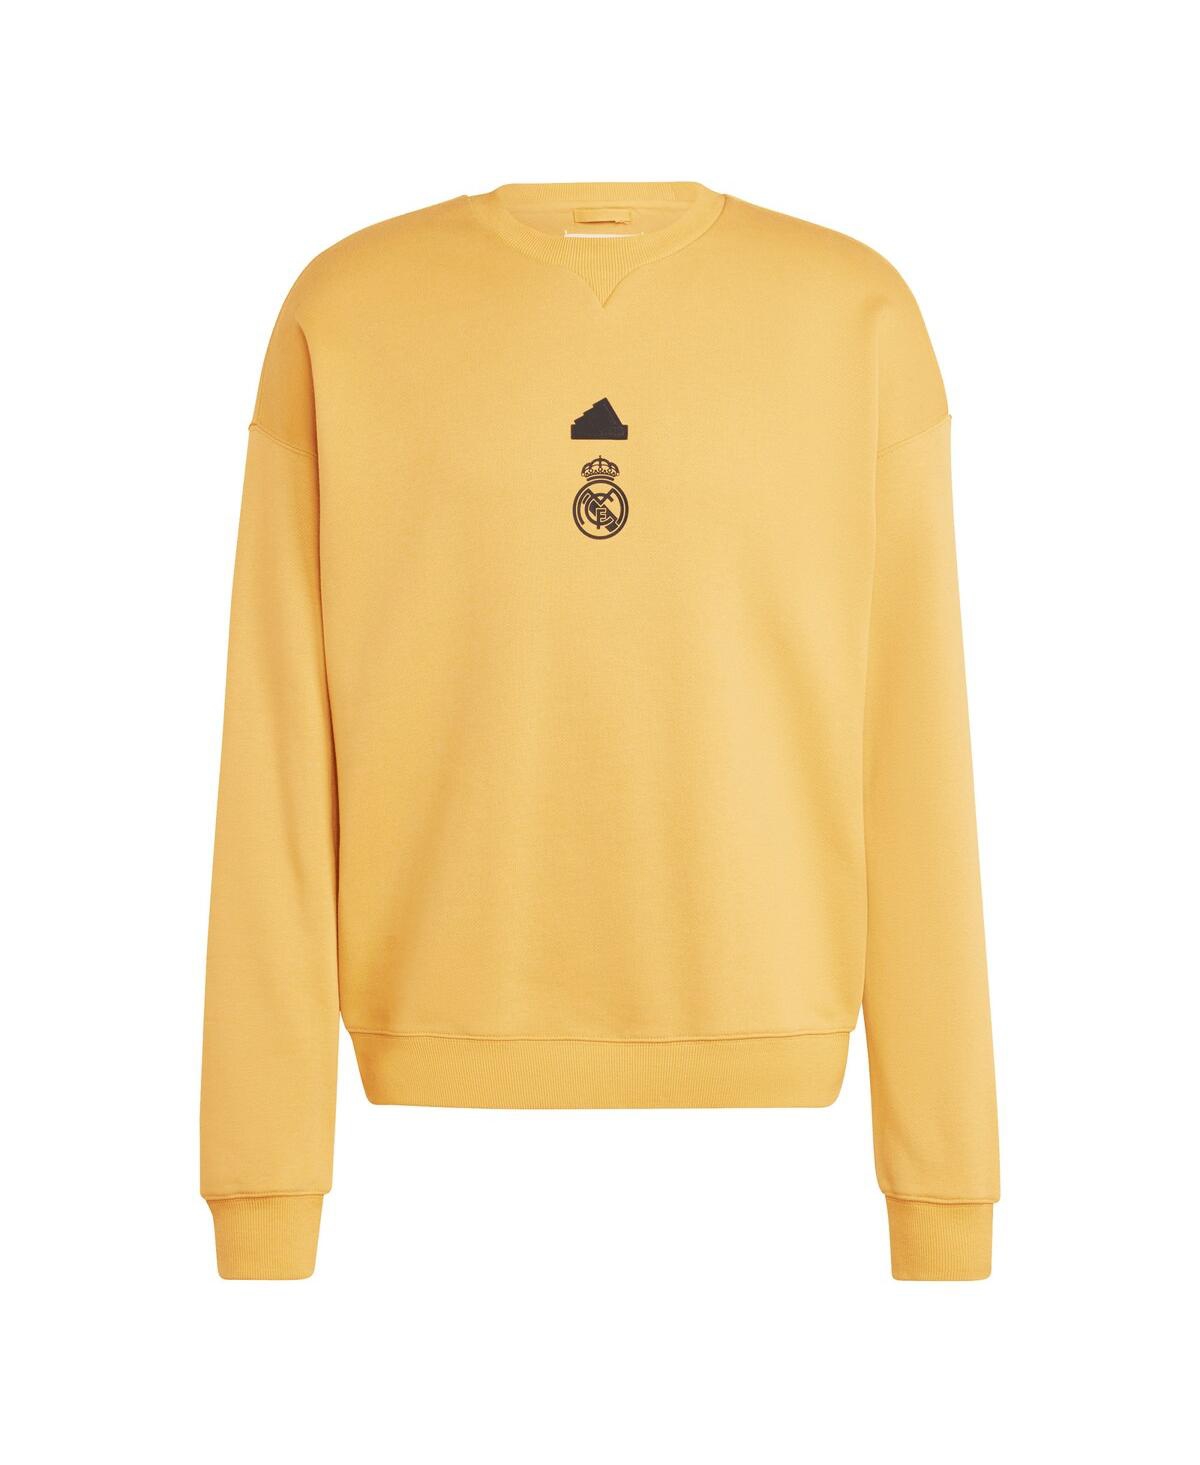 Shop Adidas Originals Men's Adidas Yellow Real Madrid Lifestyle Crew Sweatshirt